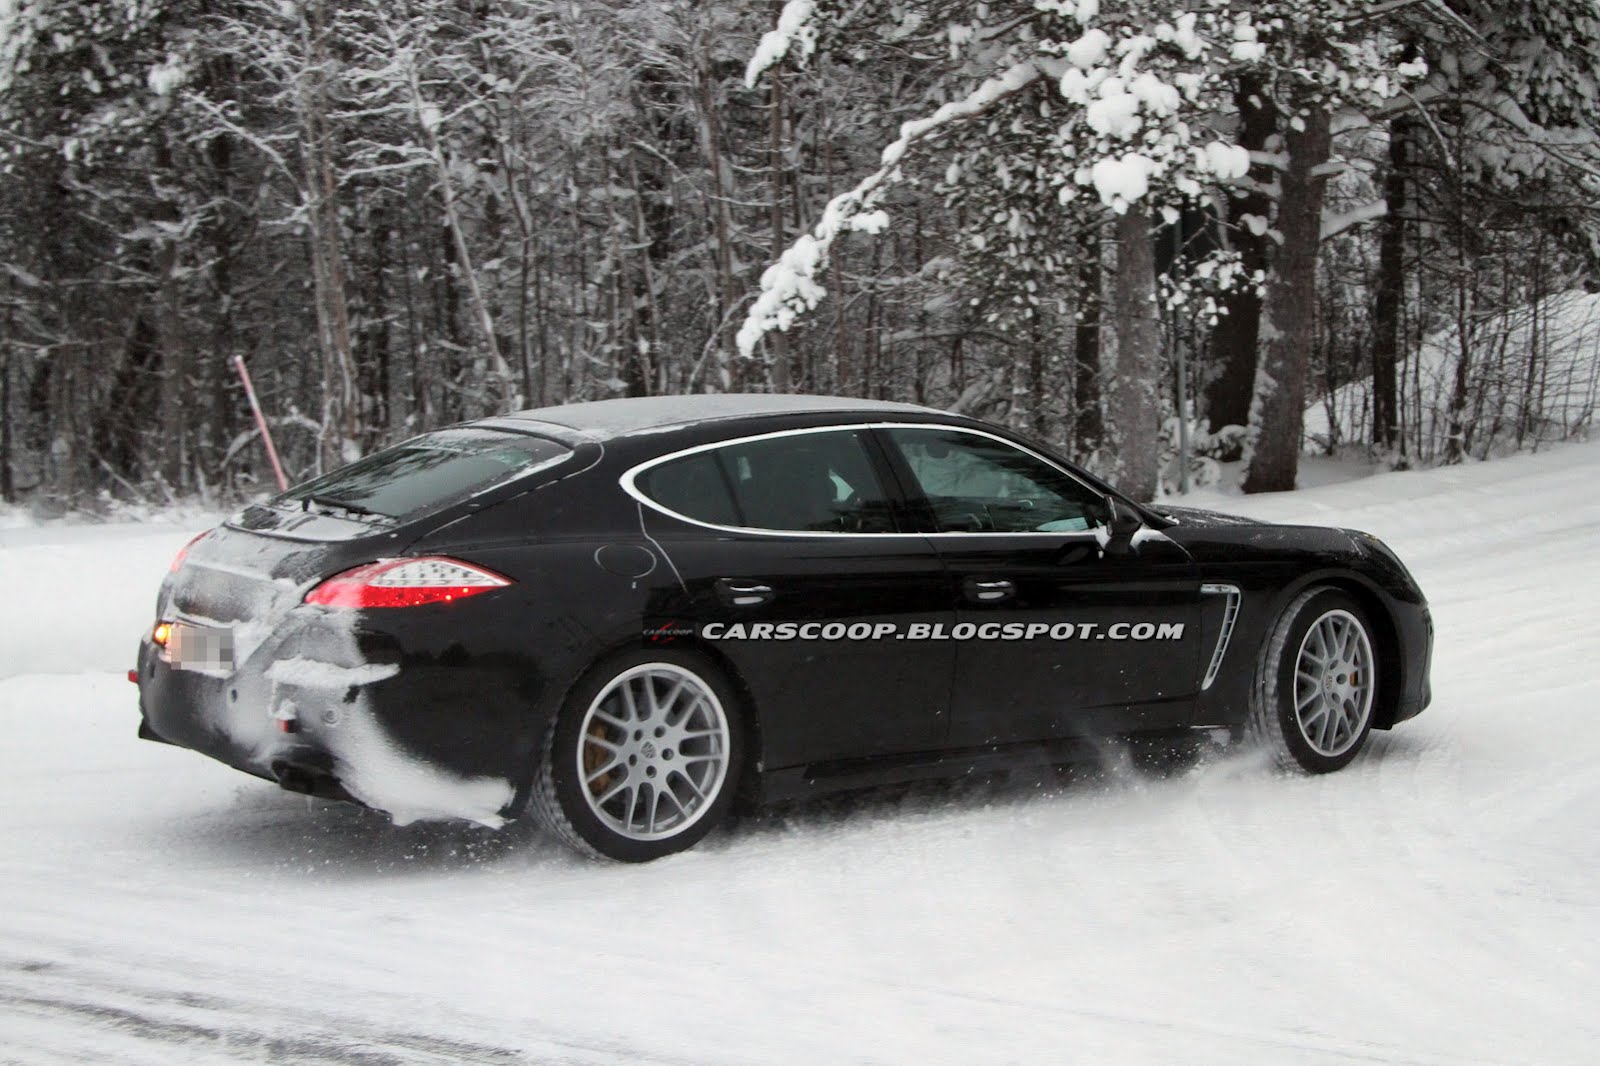 2013 Porsche Panamera spied in winter testing | Automotor Blog